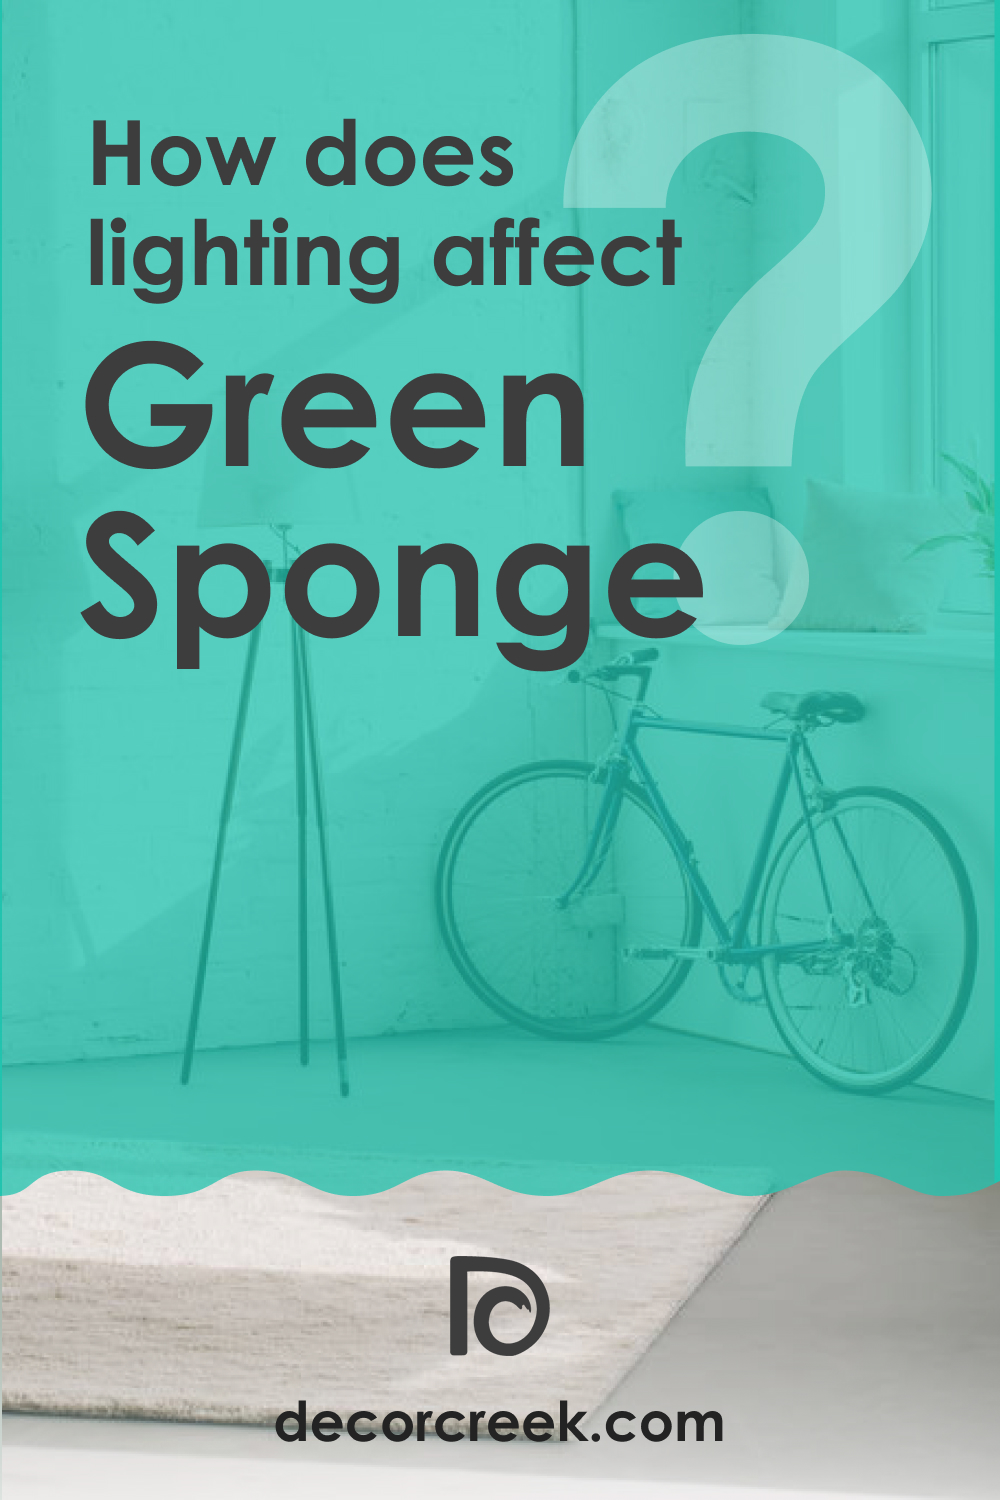 How Does Lighting Affect Green Sponge 2046-40?